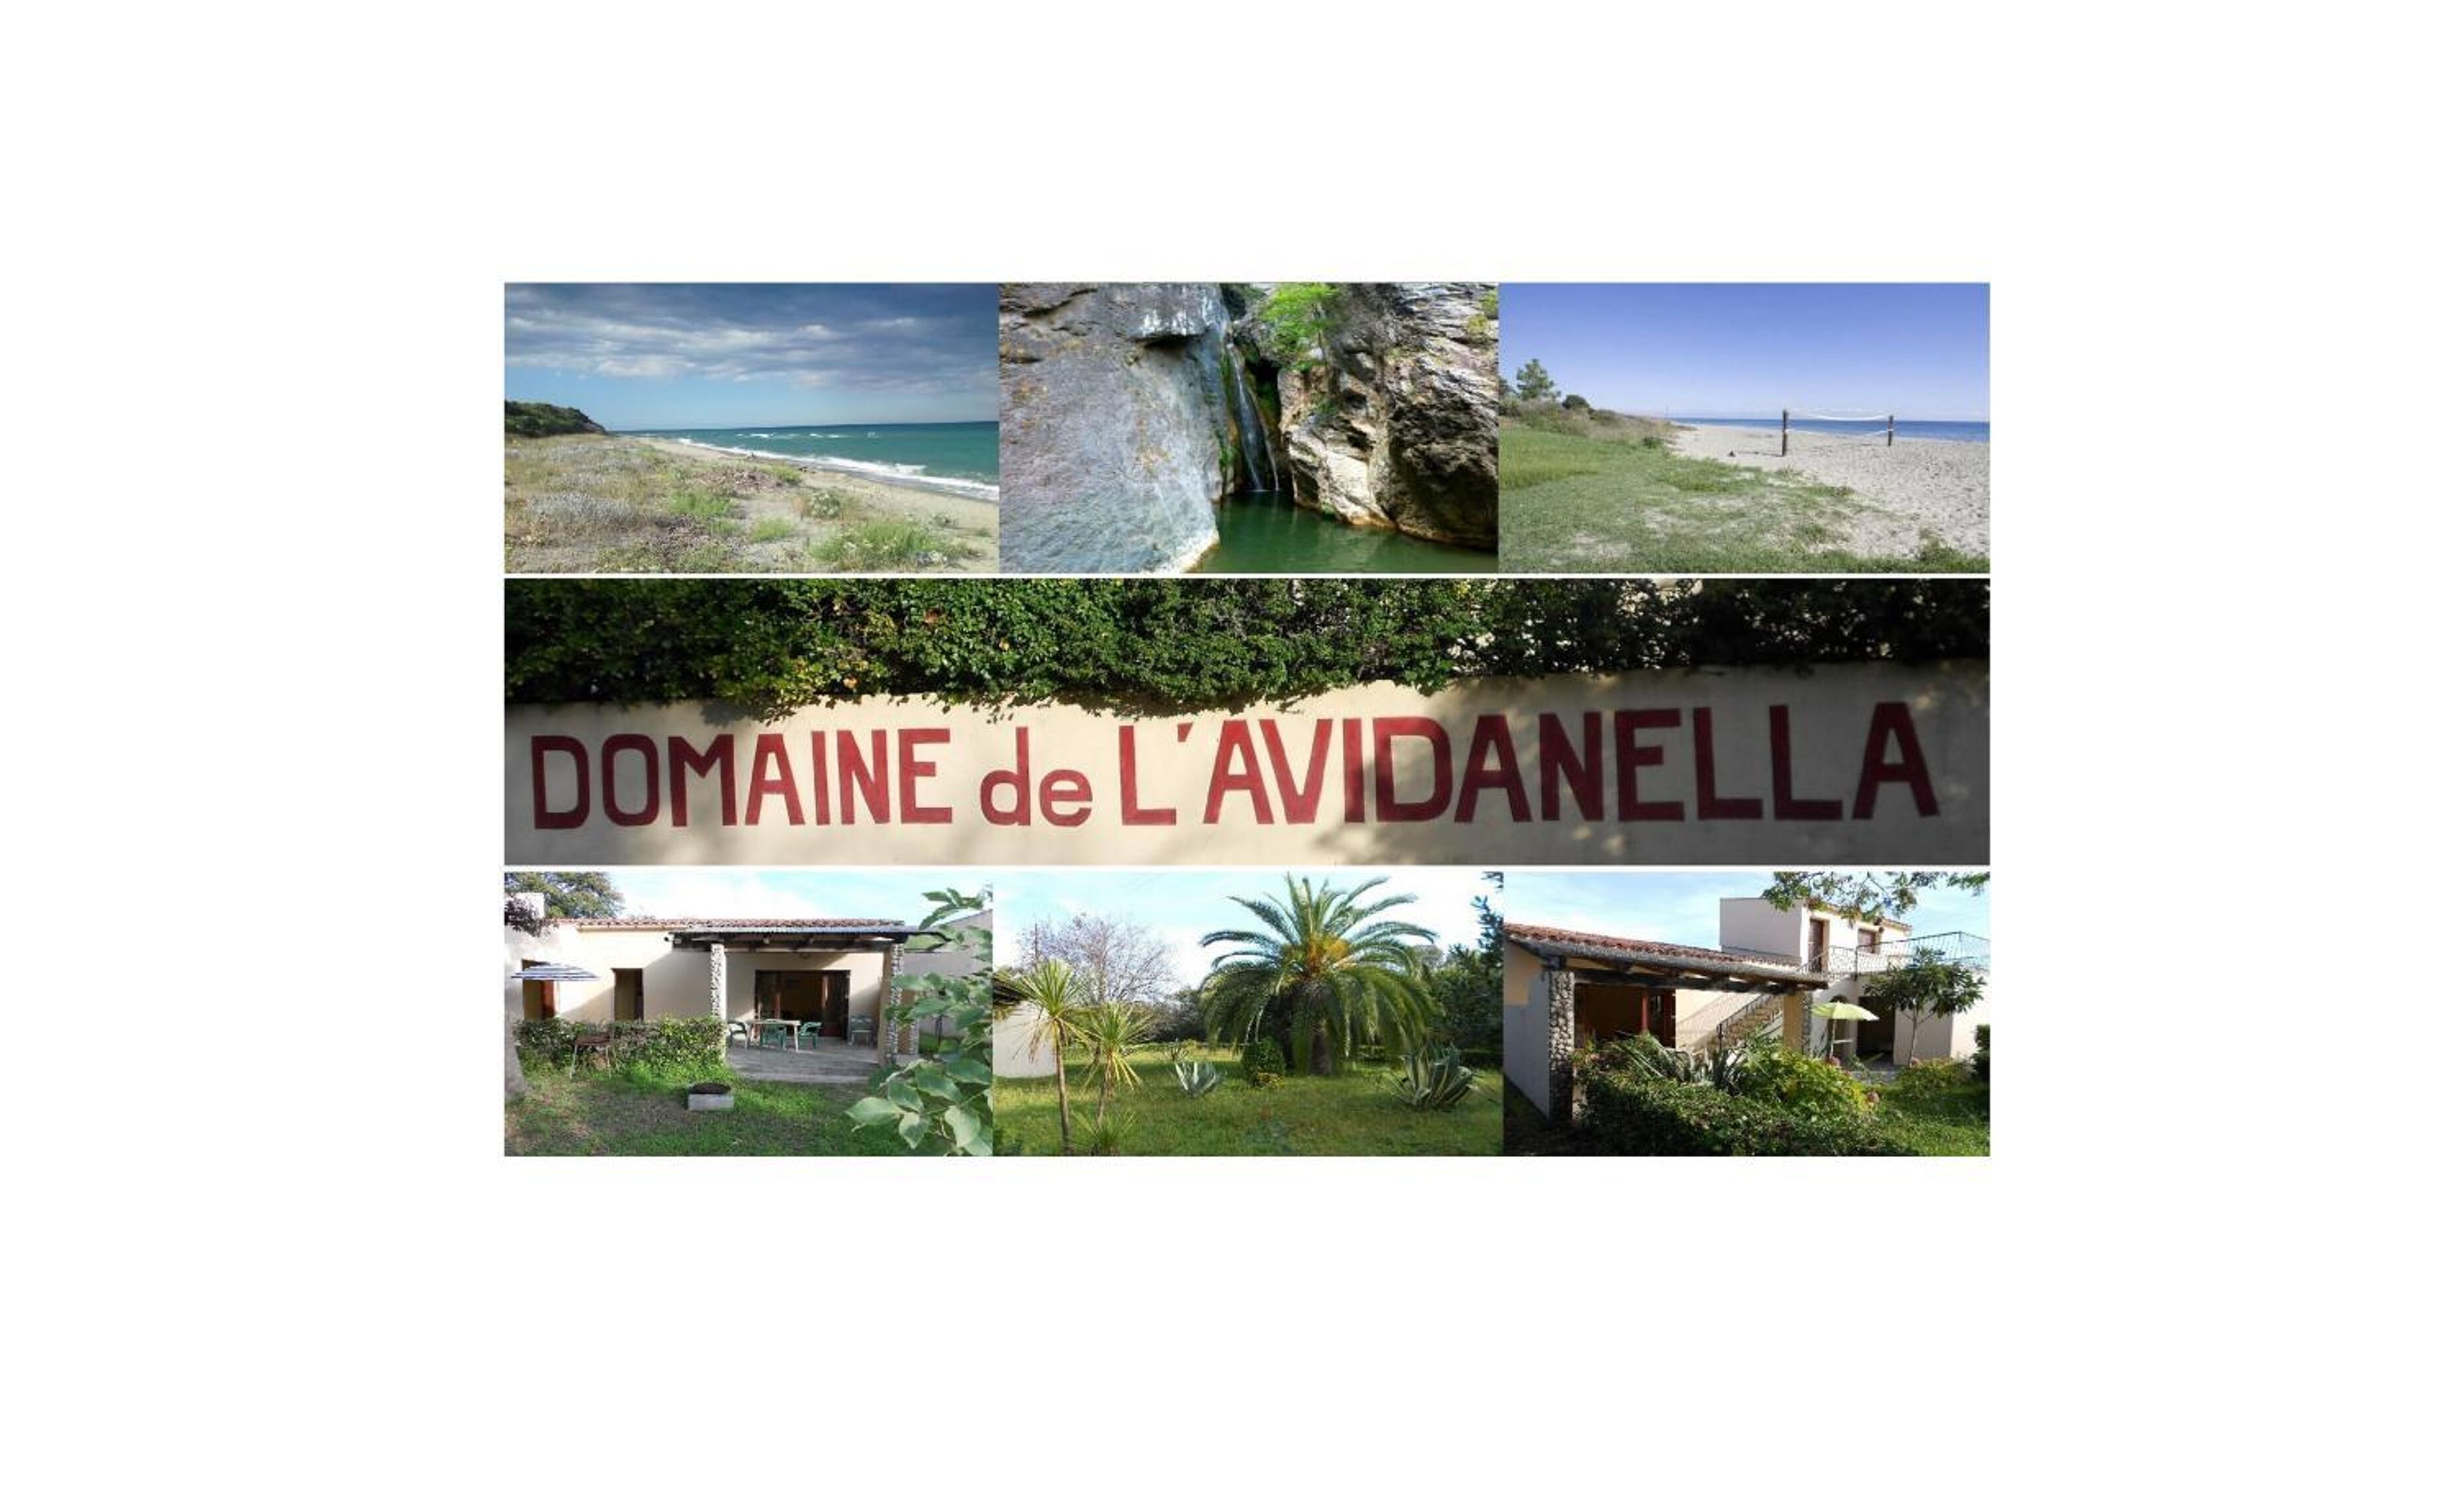 Domaine de l'Avidanella